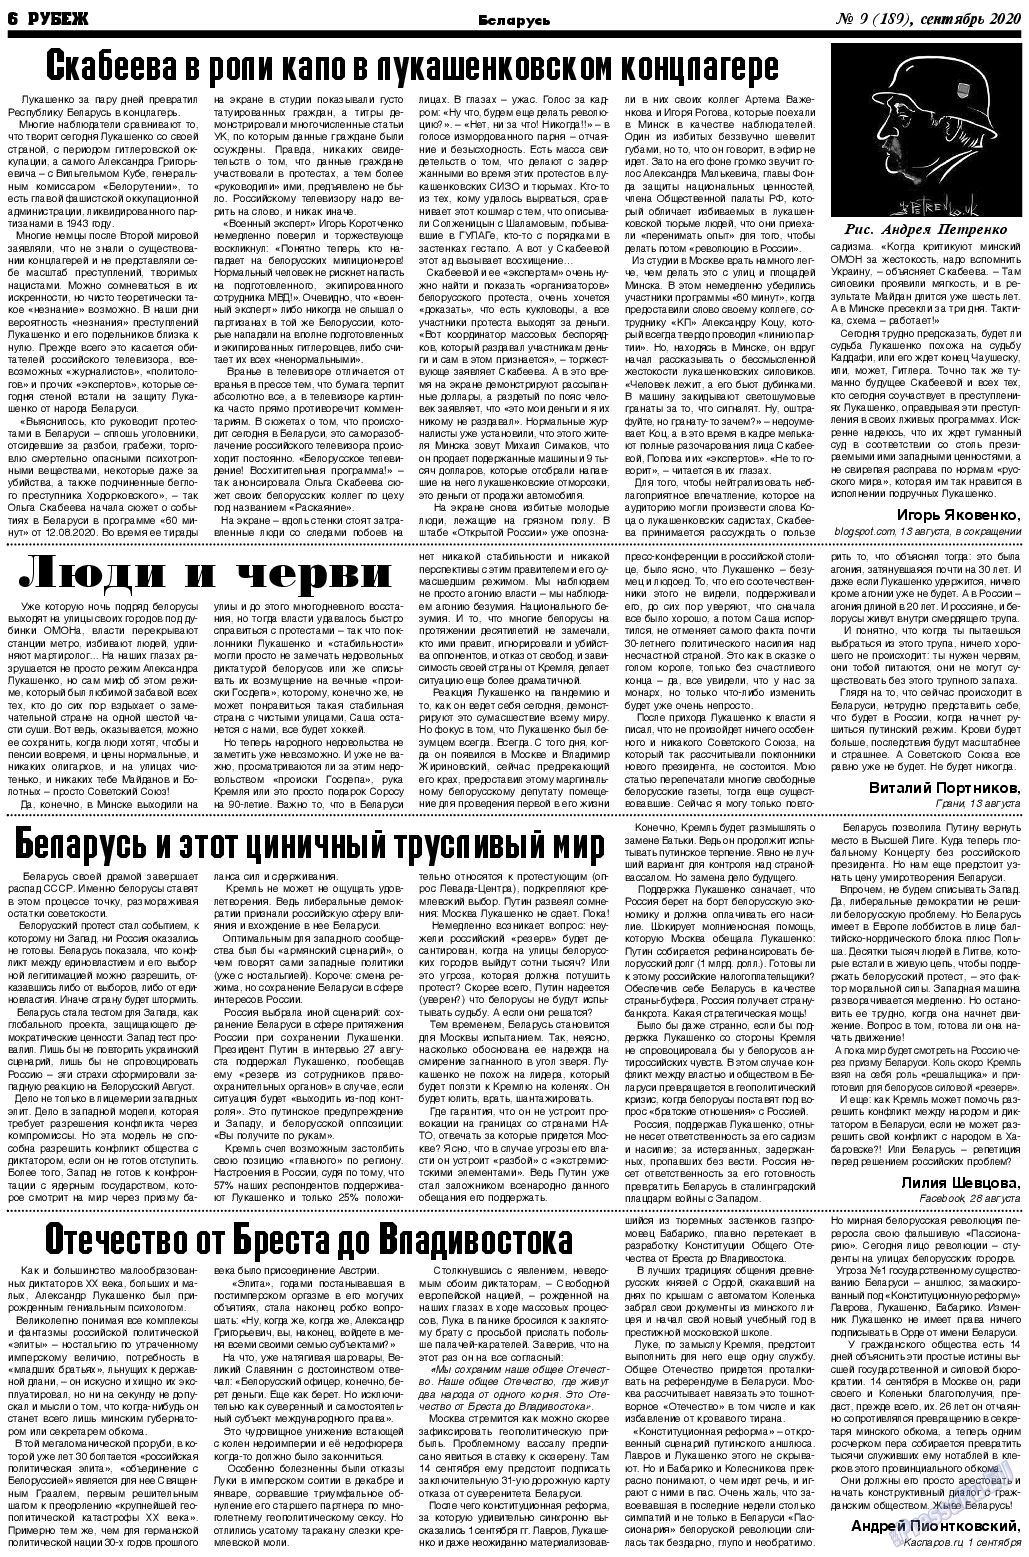 Рубеж, газета. 2020 №9 стр.6